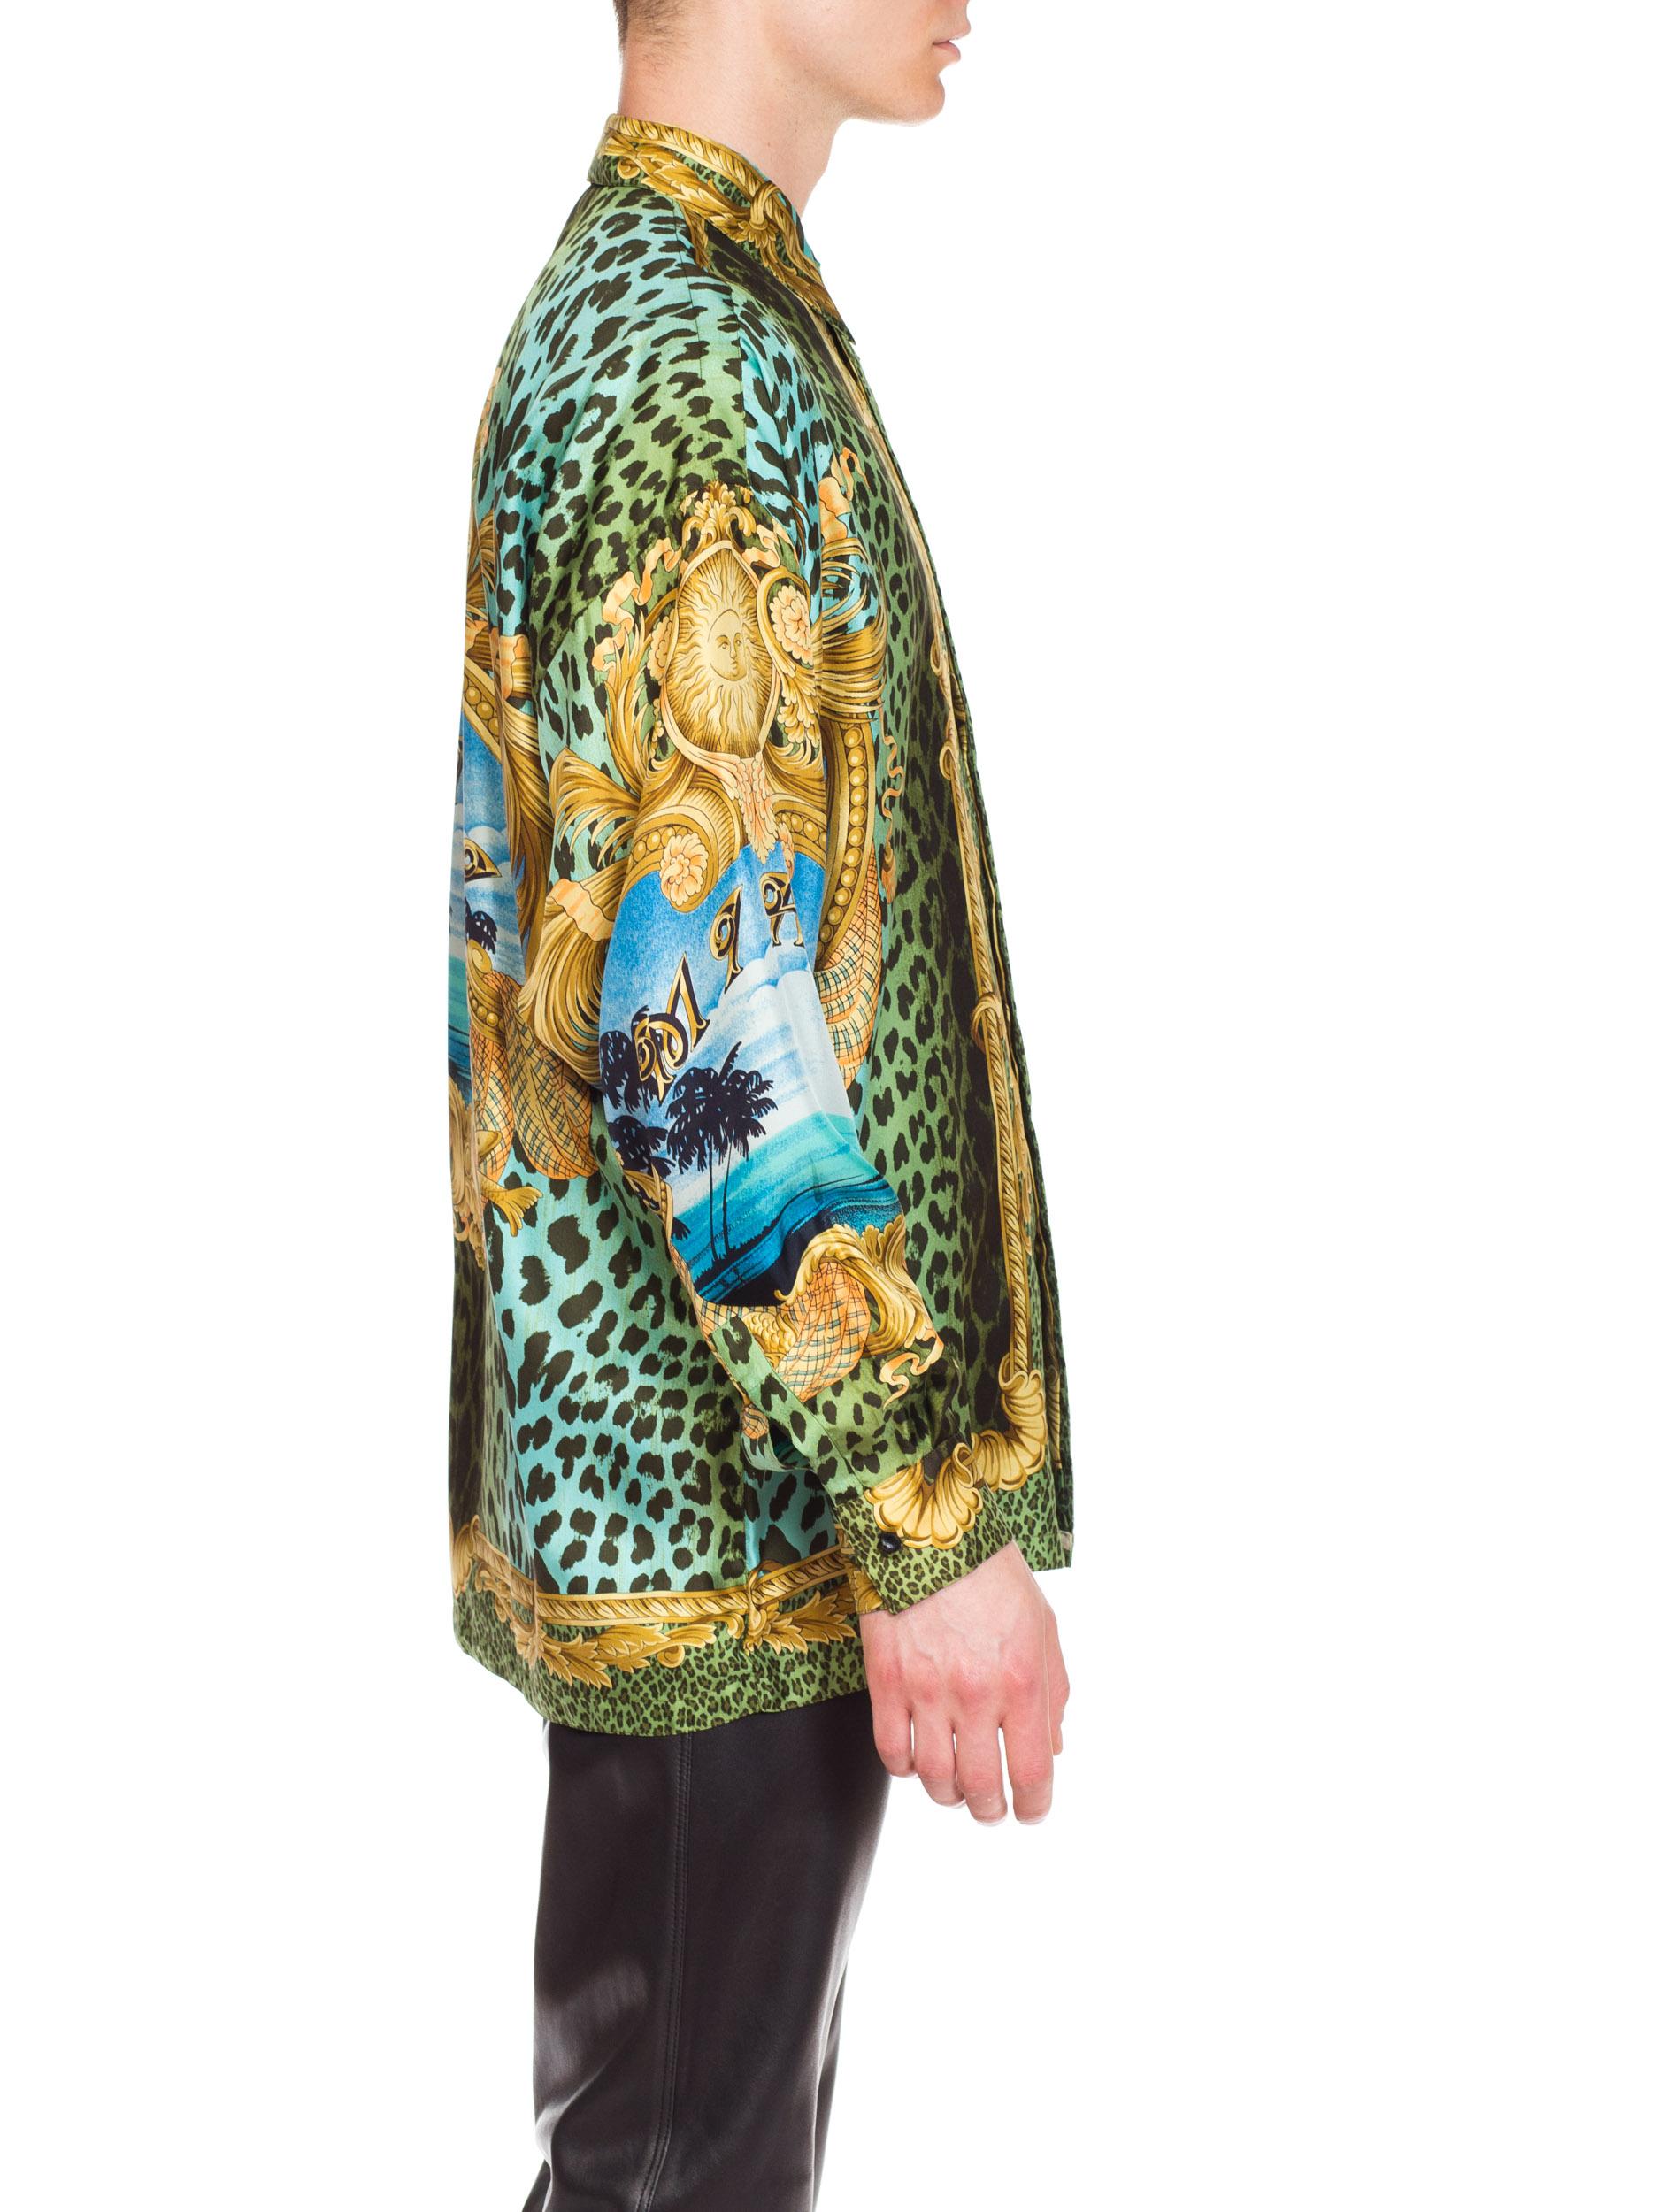 Gianni Versace Miami Leopard Baroque Silk Shirt, 1990s  5